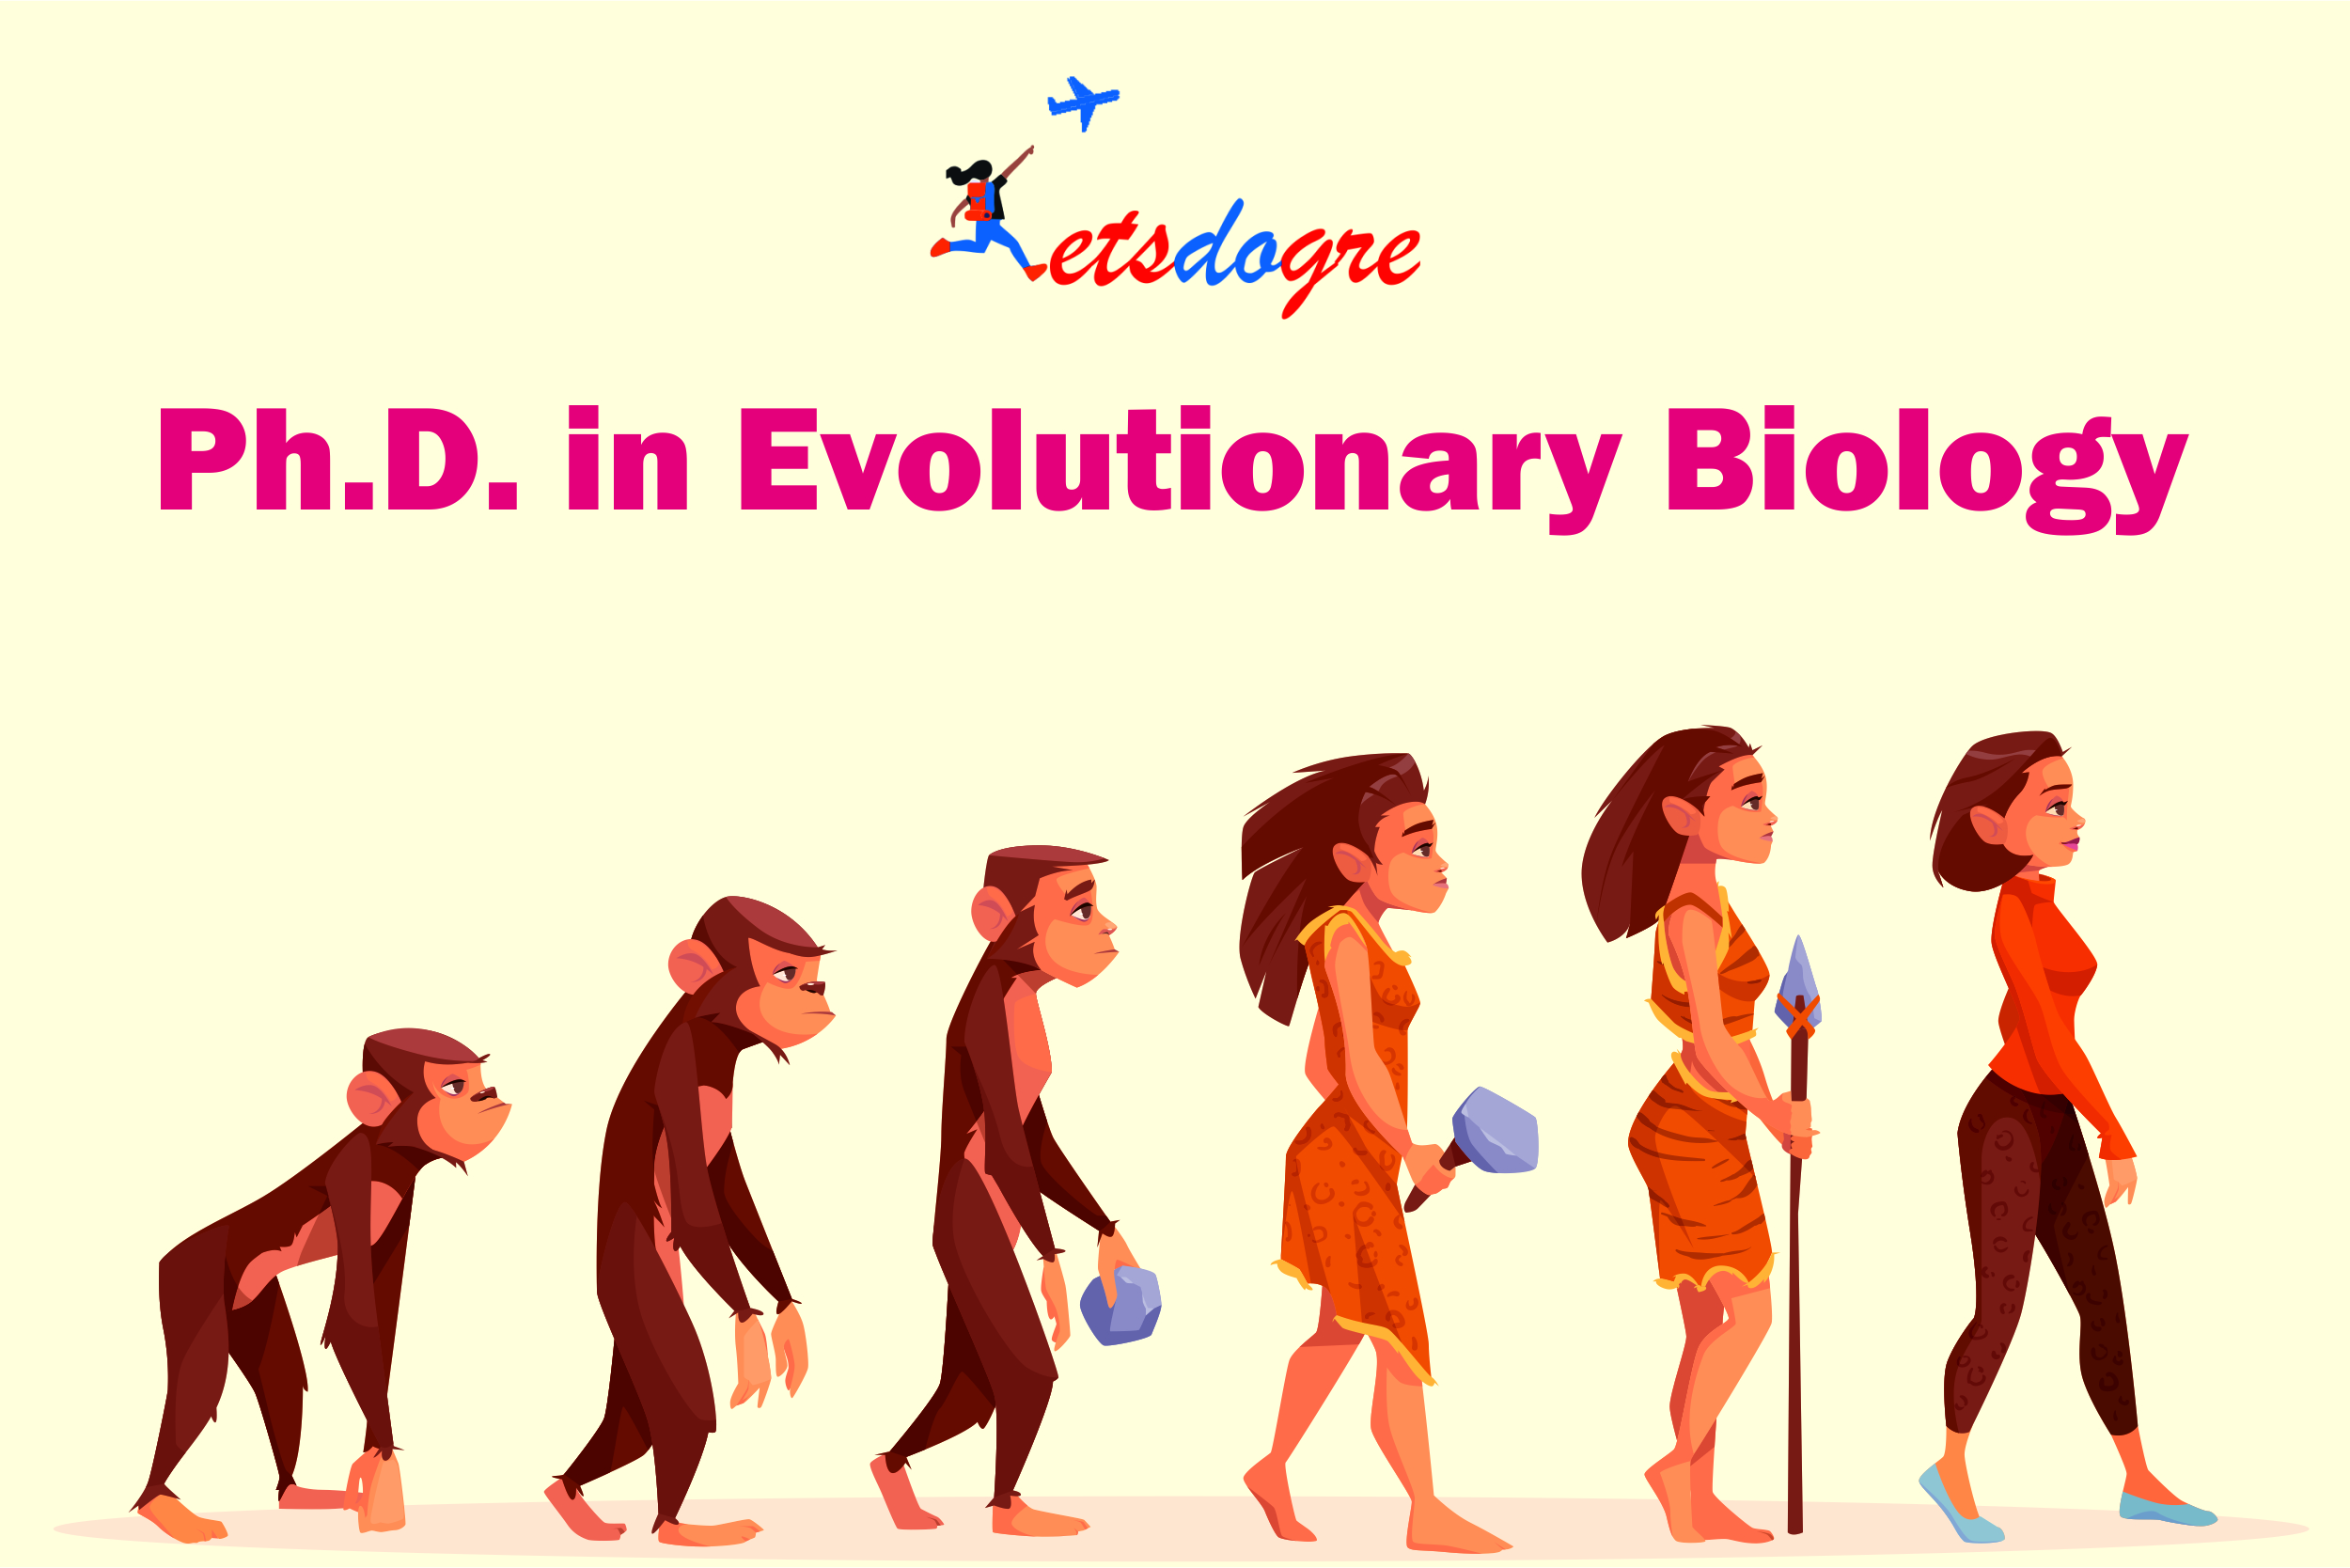 Ph.D. in Evolutionary Biology